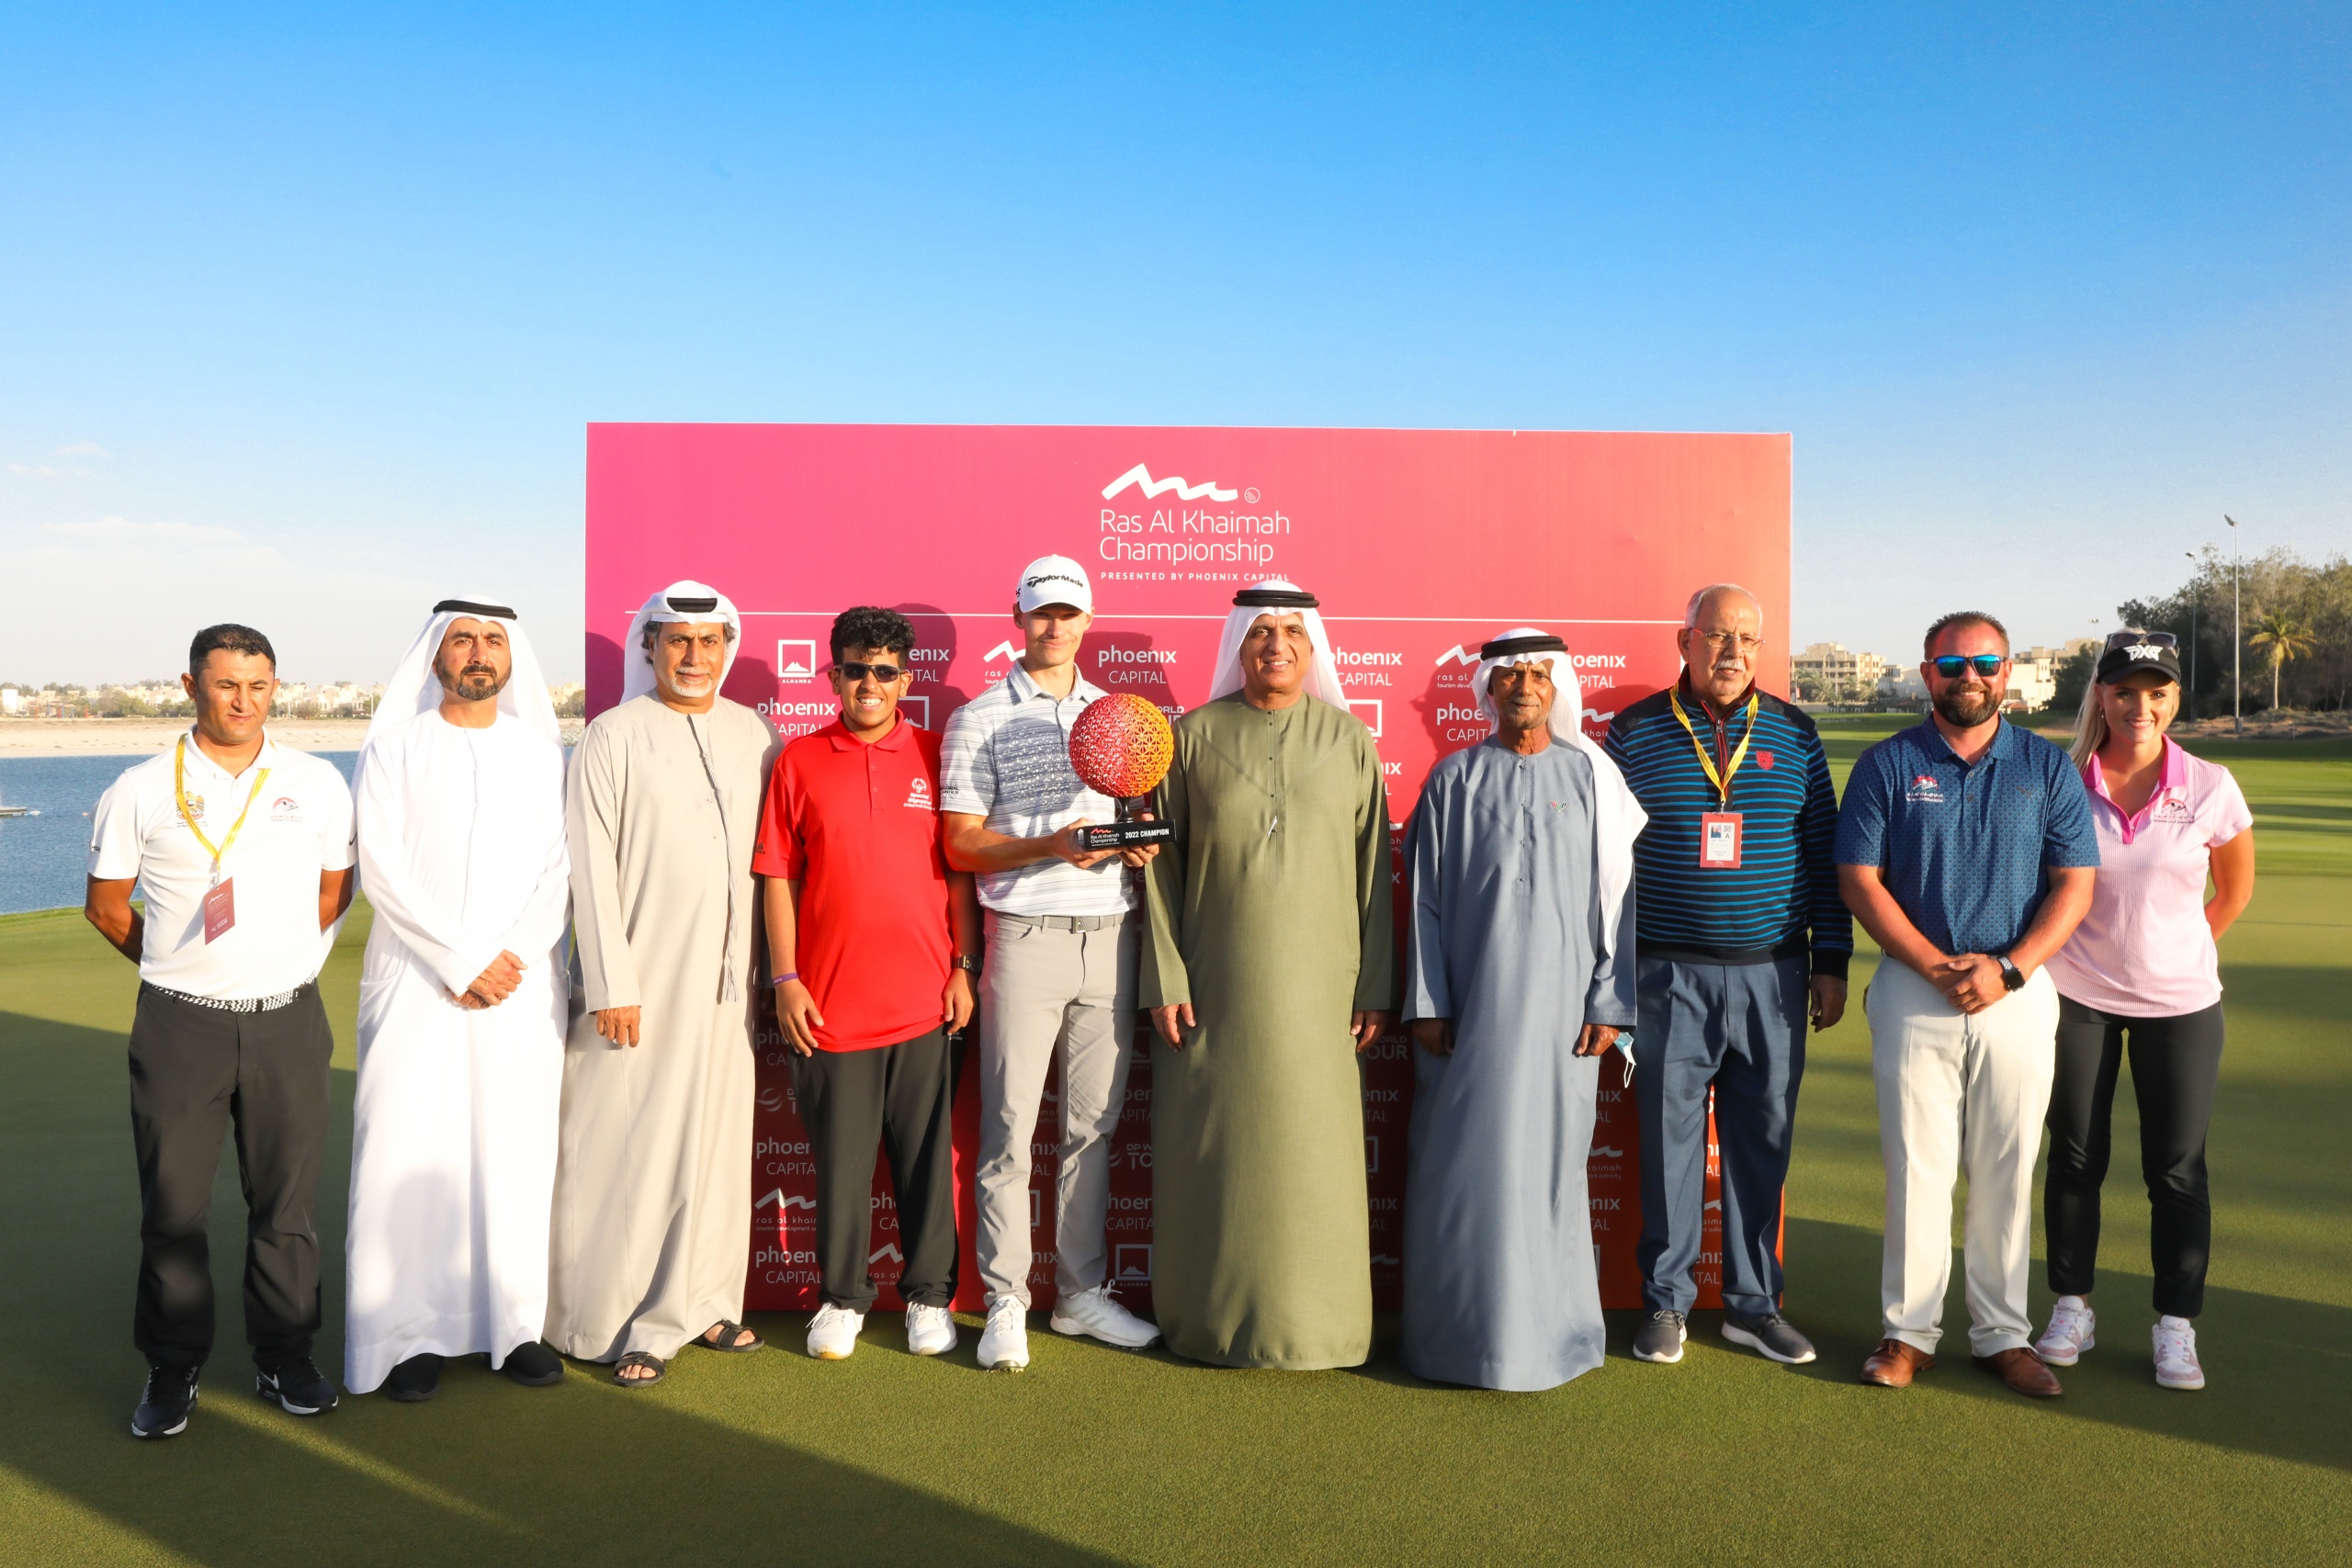 Ruler of ras al khaimah and guests awarding golf champion the award